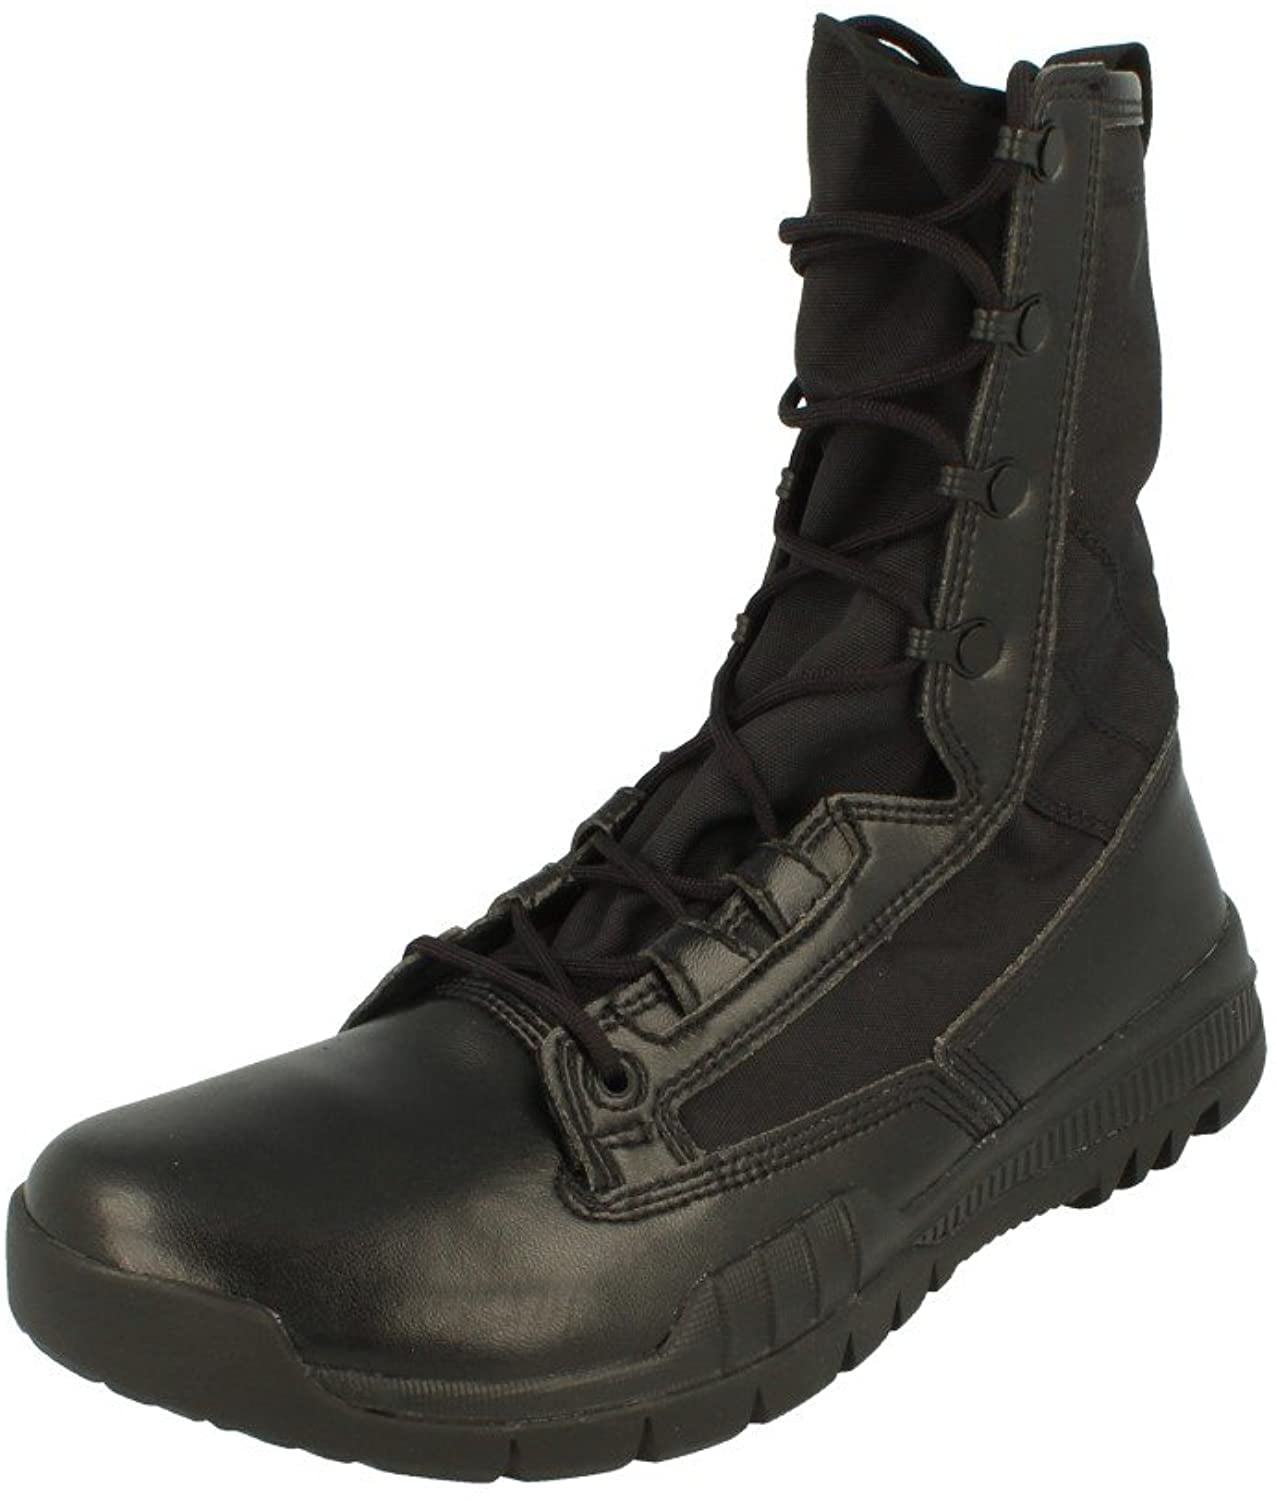 NIKE Mens SFB Special Field Boots 329798-200 15 Black/Black - Walmart.com